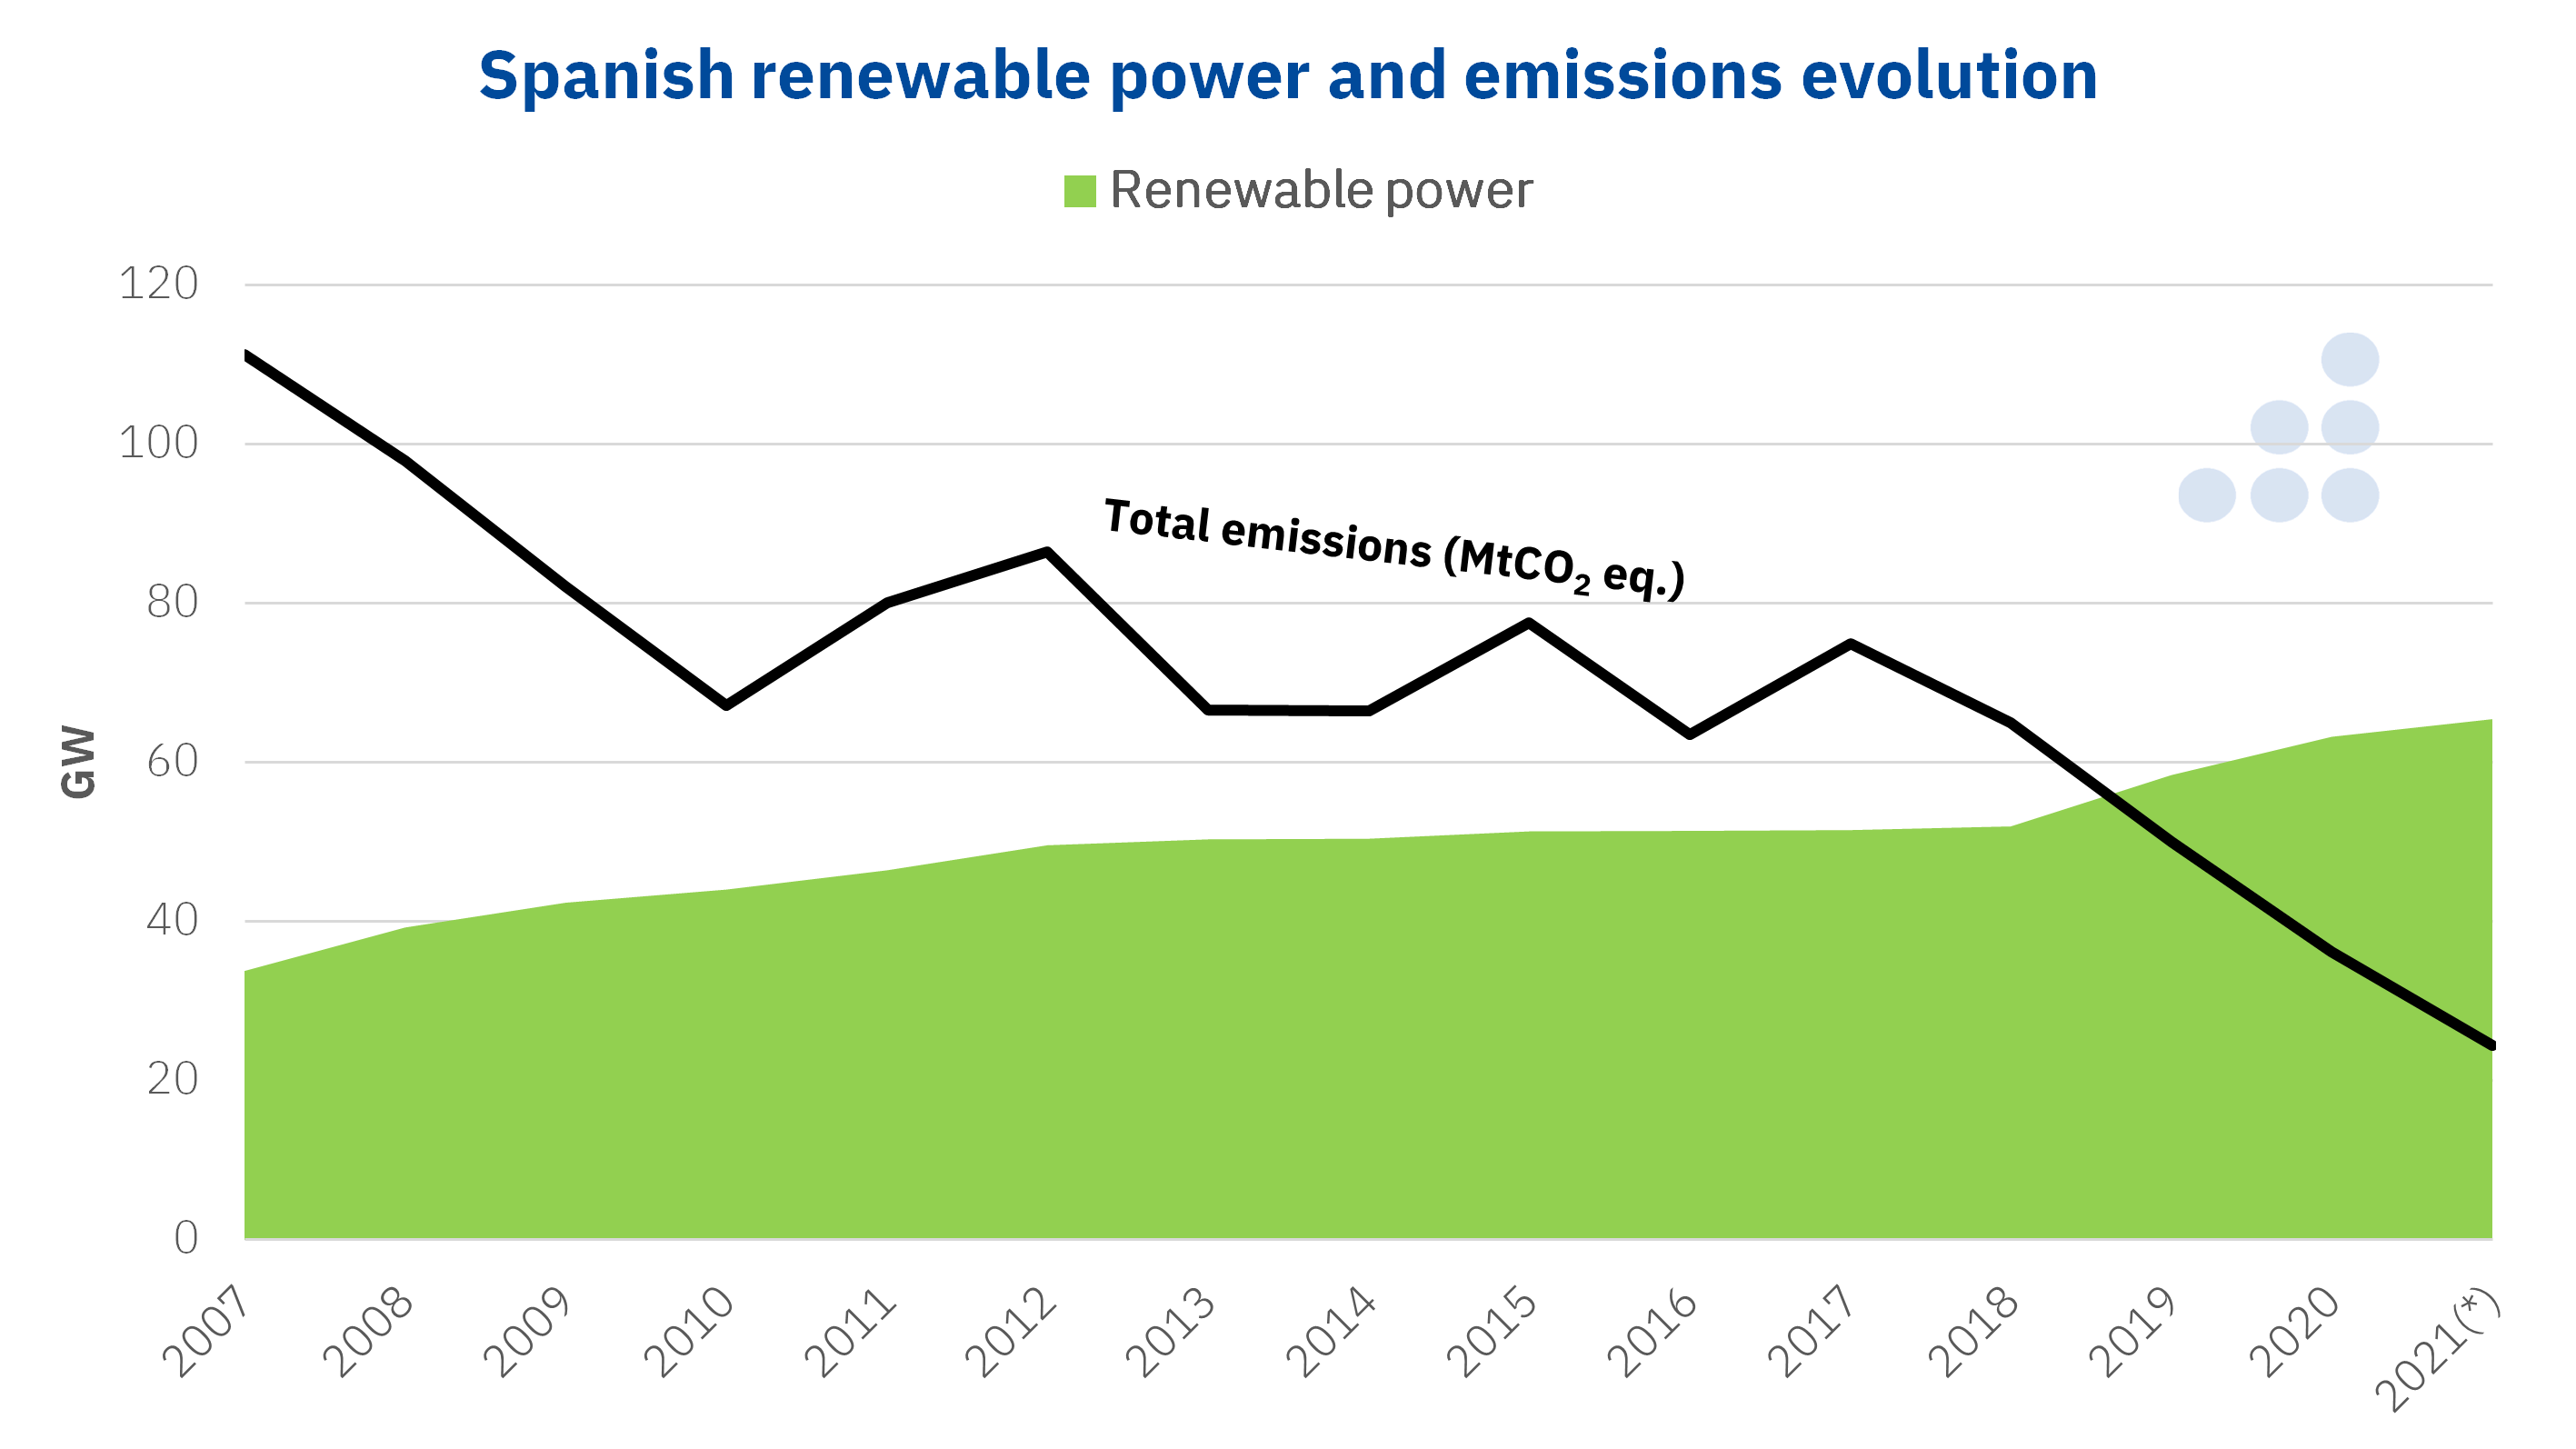 AleaSoft - Renewable power CO2 emissions Spain